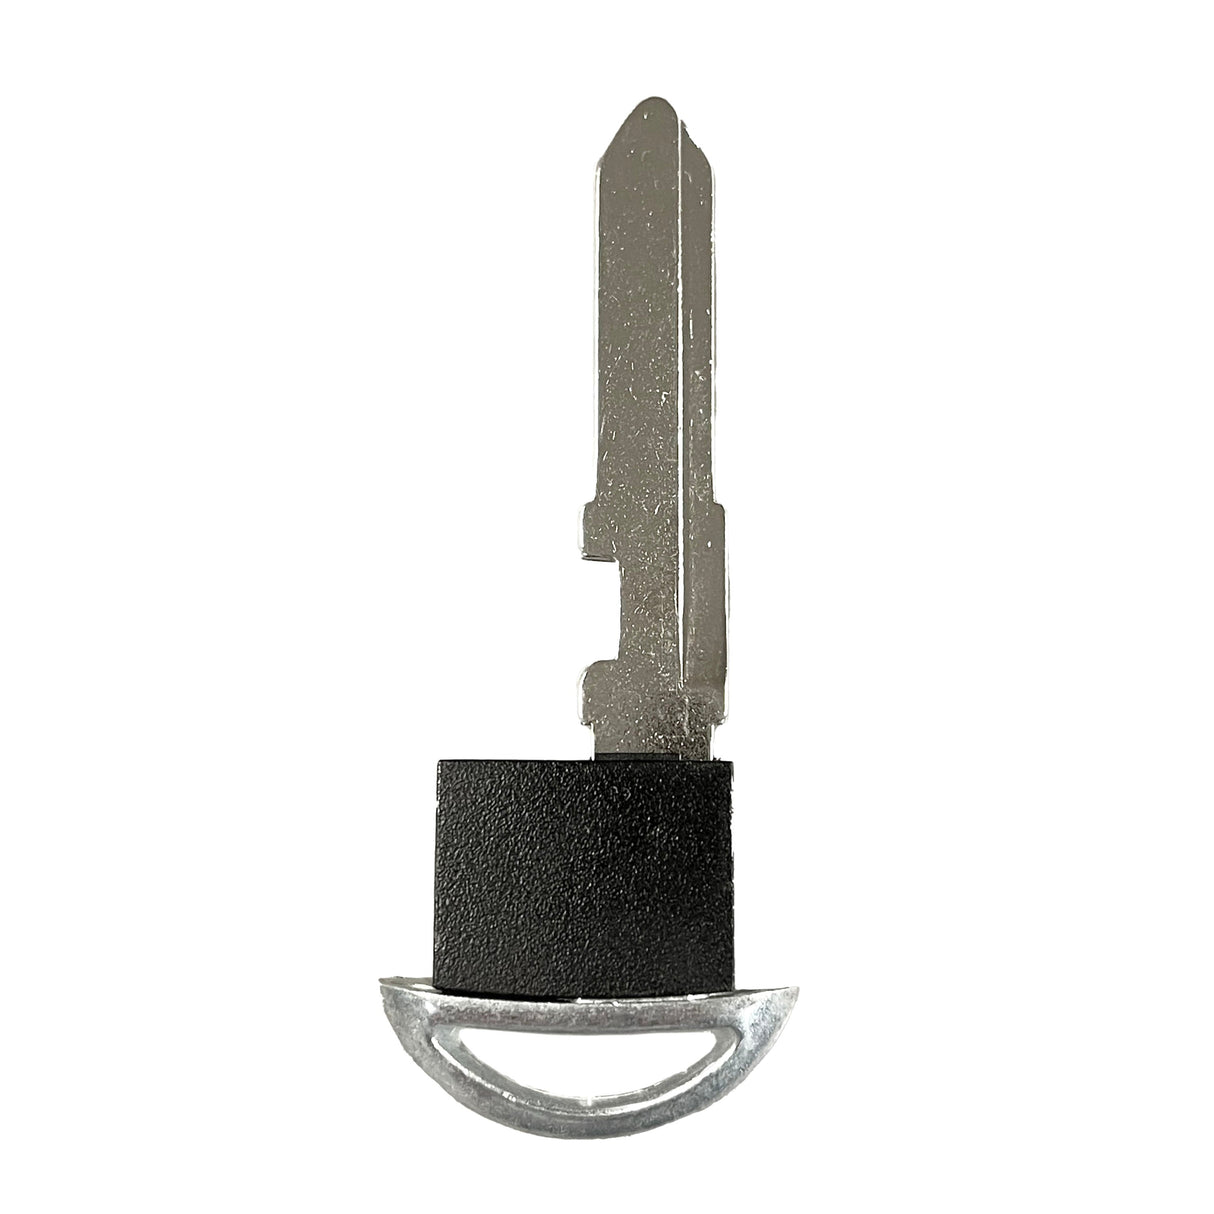 INSERT 2009-2015 Mazda Smart Emergency Key Blade With ID 4D 63 80 BIT Transponder Chip MZ27